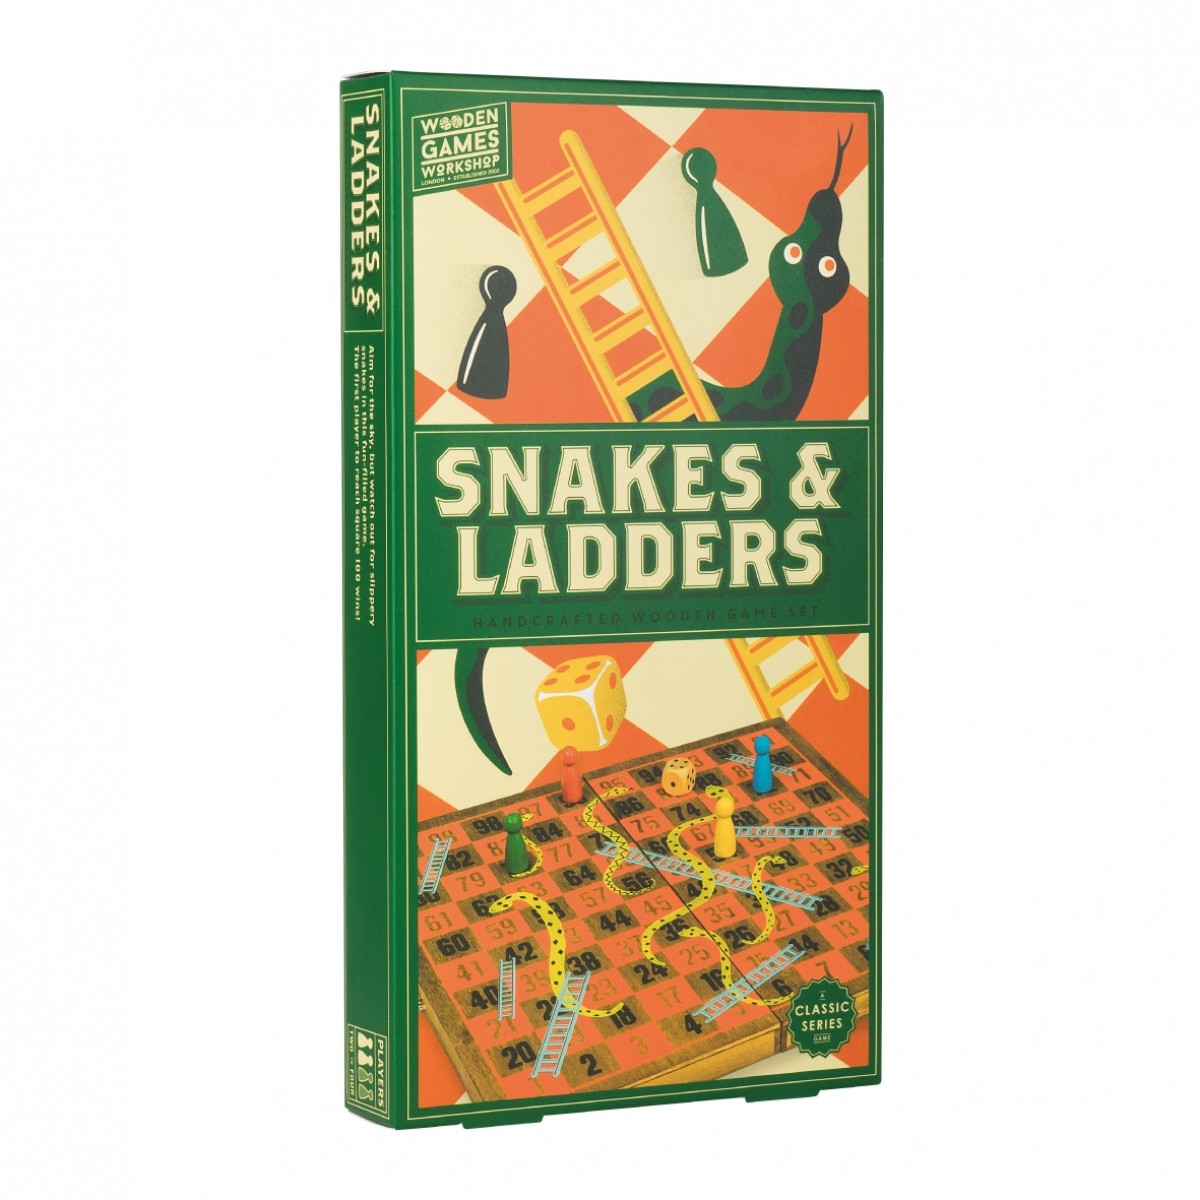 Wooden Games Workshop "Snakes & Ladders"